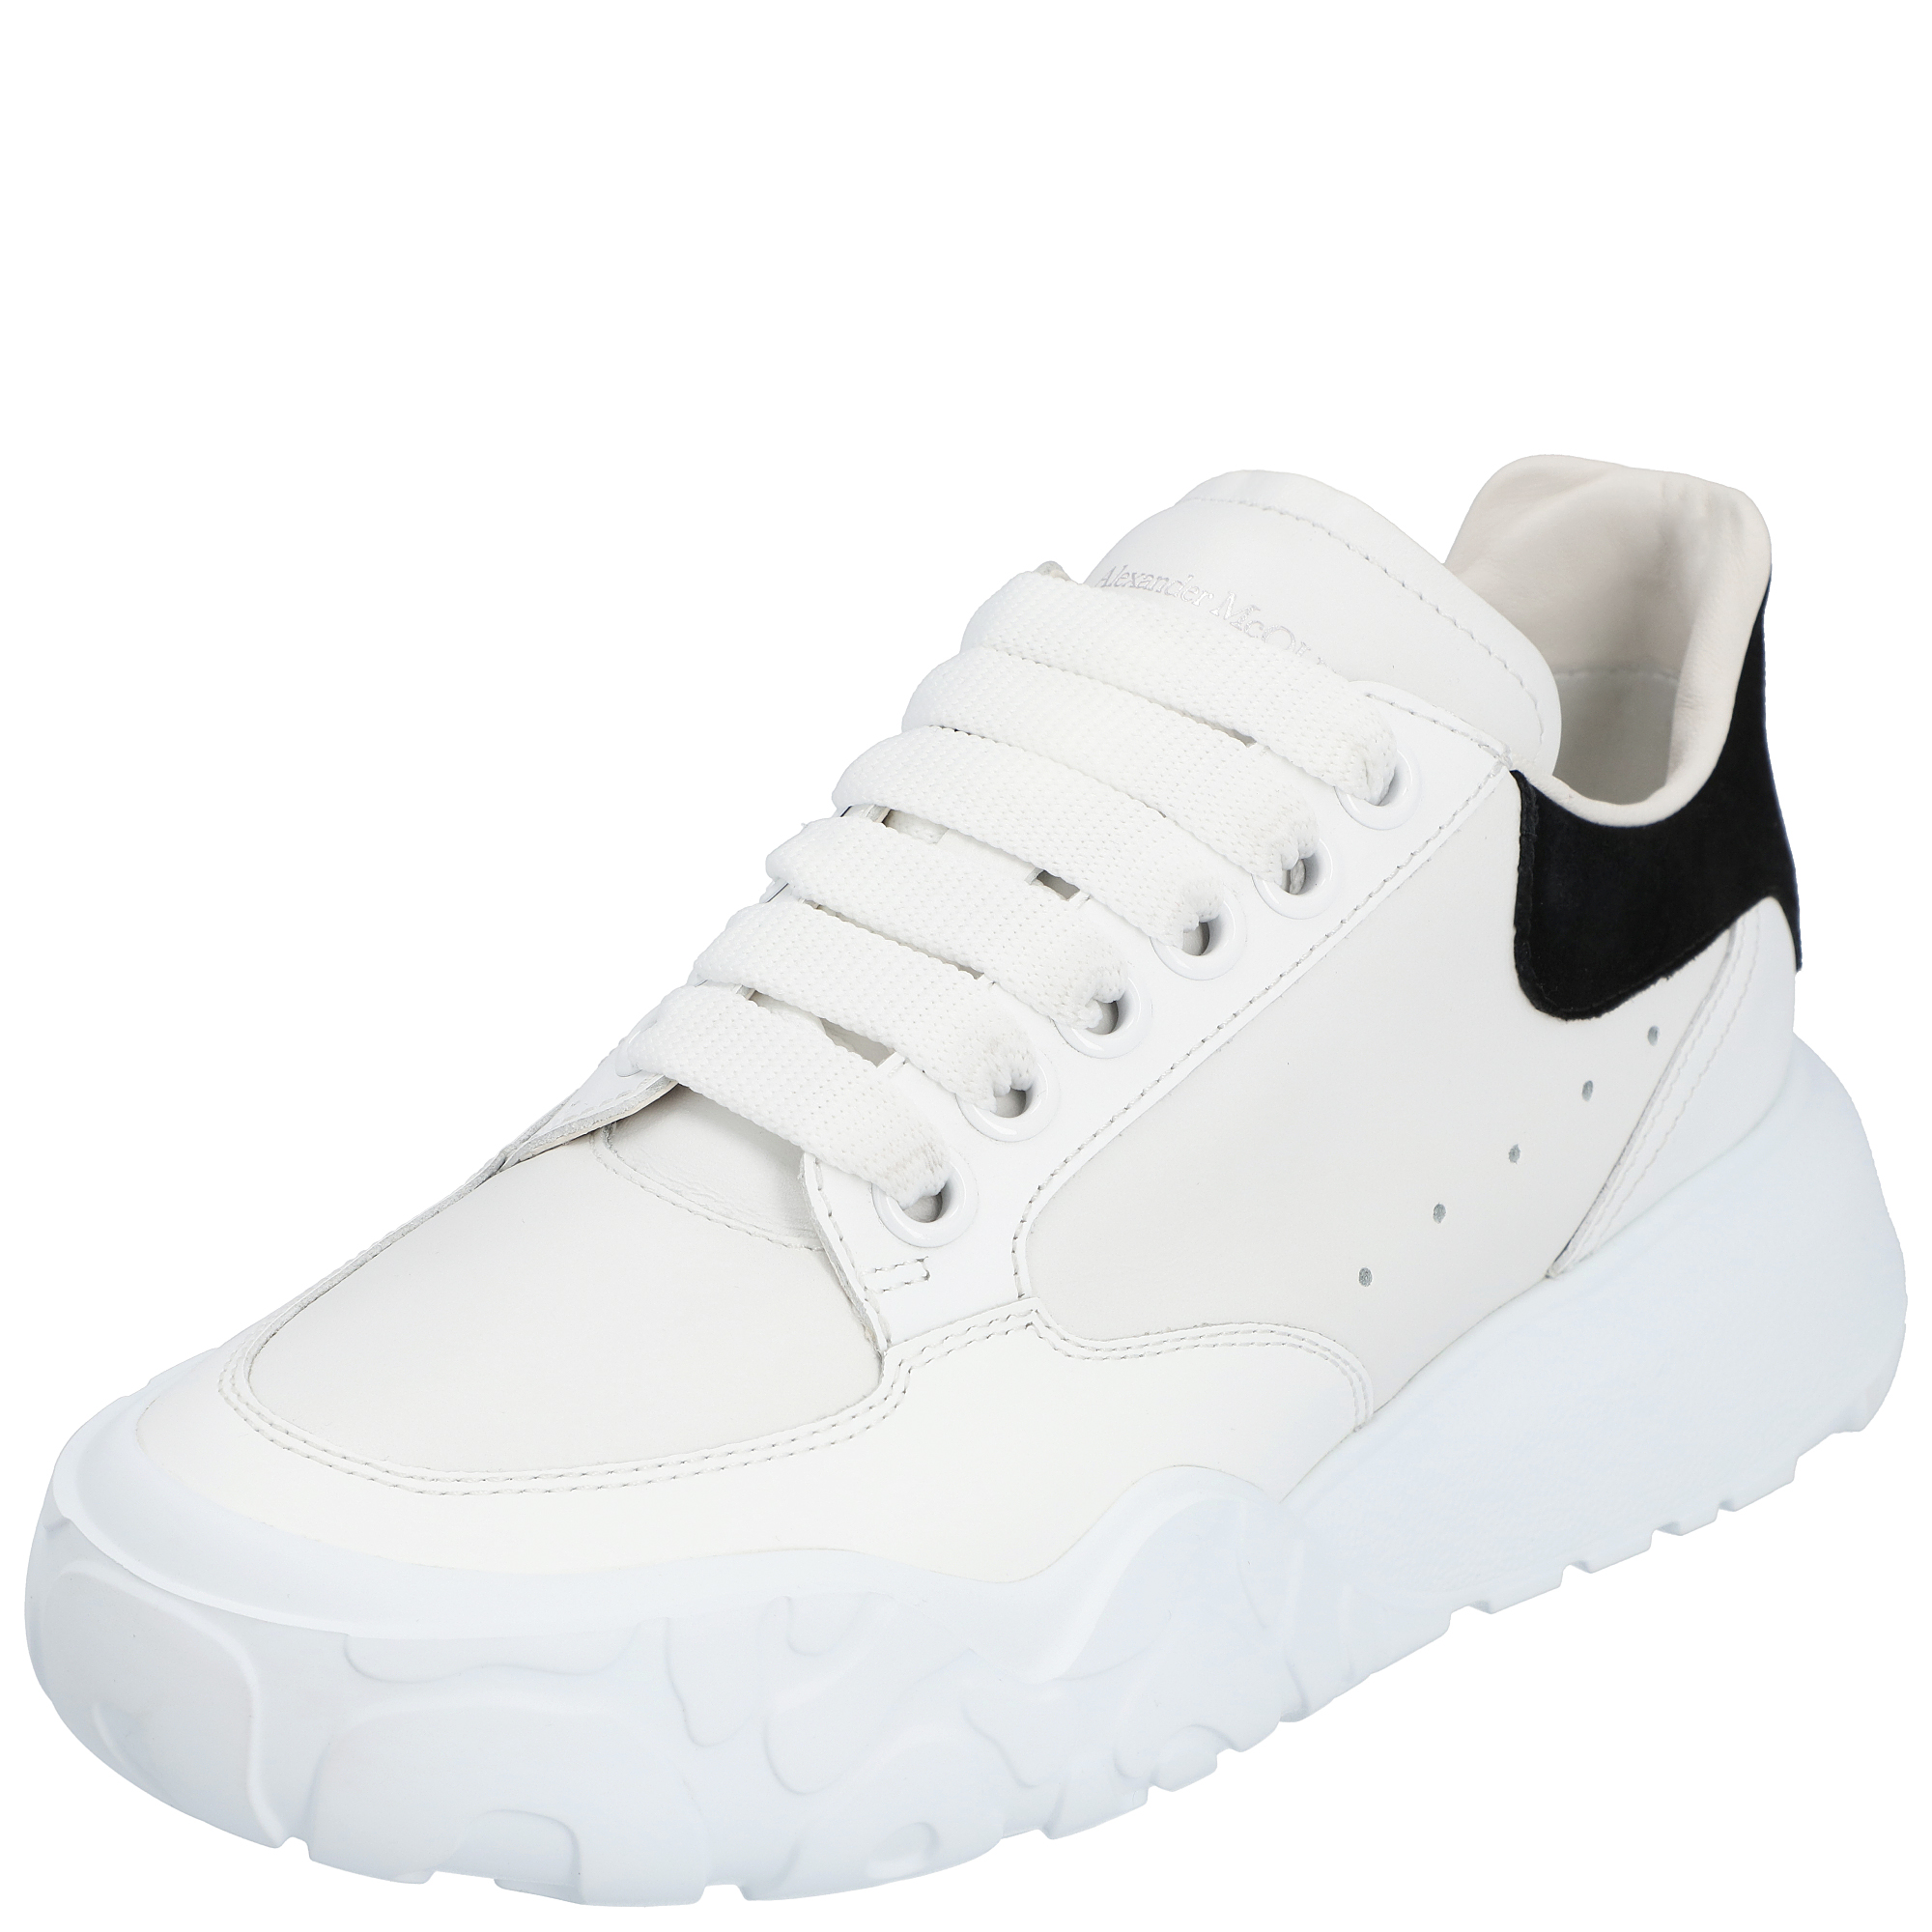 Alexander McQueen Black/White Leather Court Trainer Sneakers EU 37 (US 6.5/UK 4)